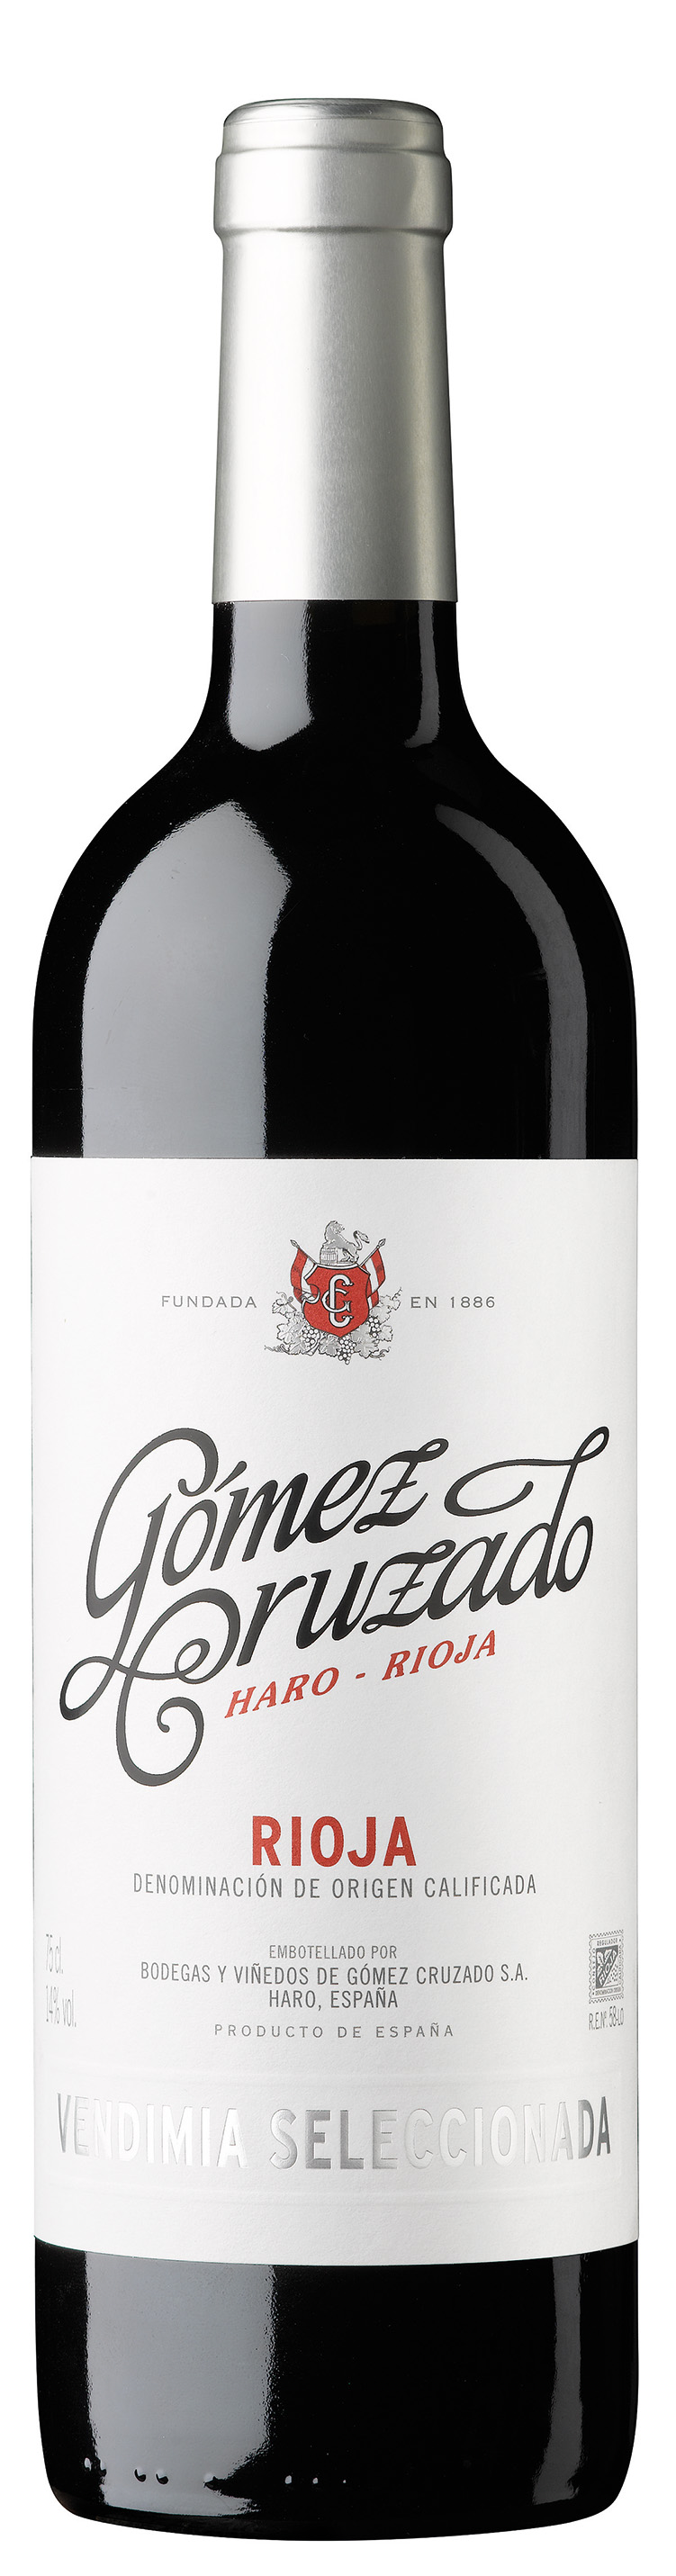 Vendimia Seleccionada "Gomez Cruzado" Rioja DOCa 2015